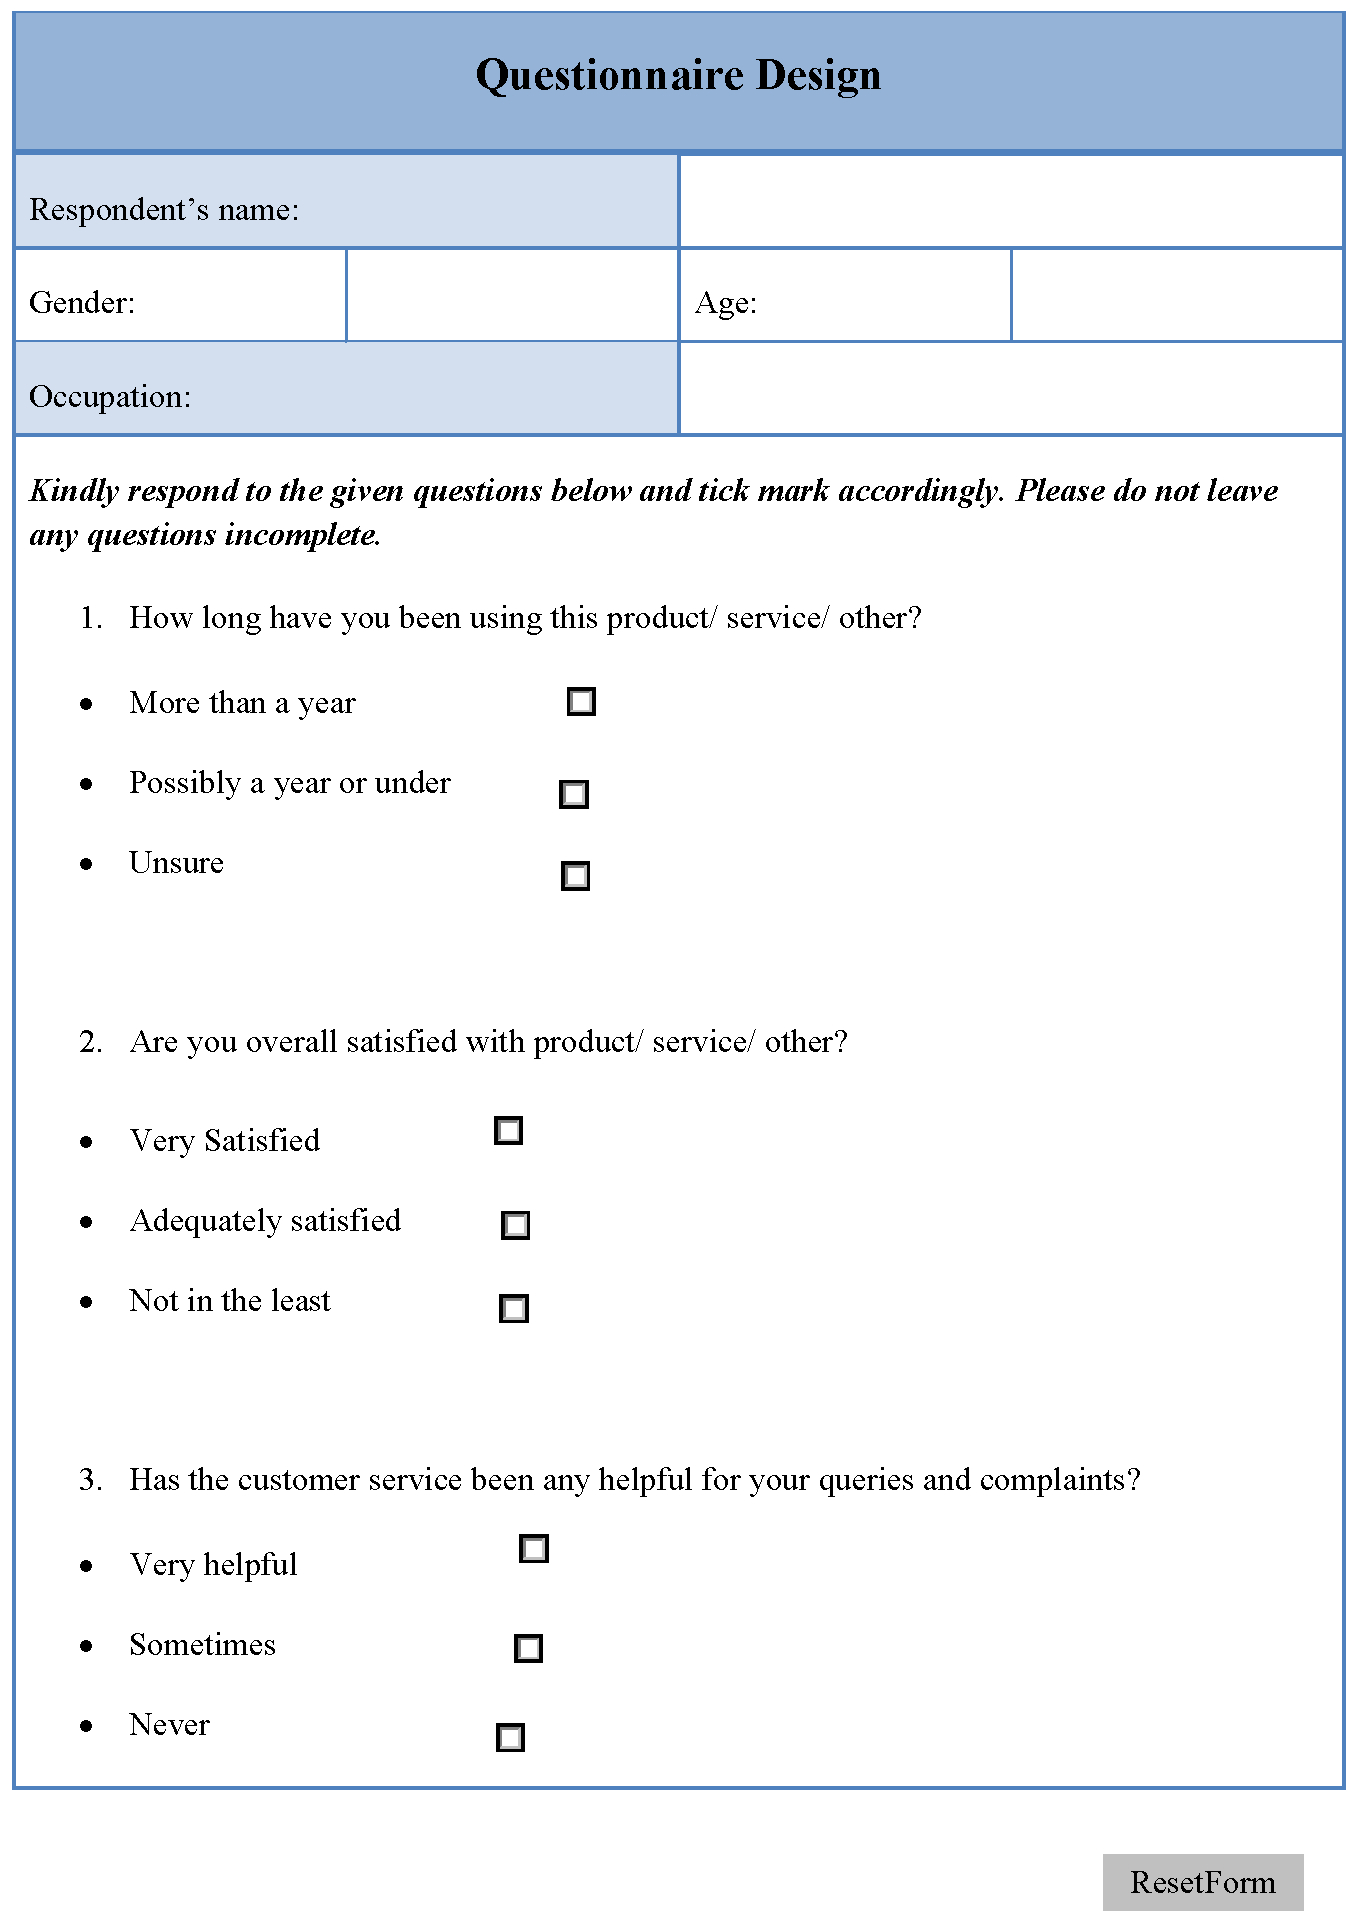 Questionnaire Design Template | Editable Forms Within Questionnaire Design Template Word